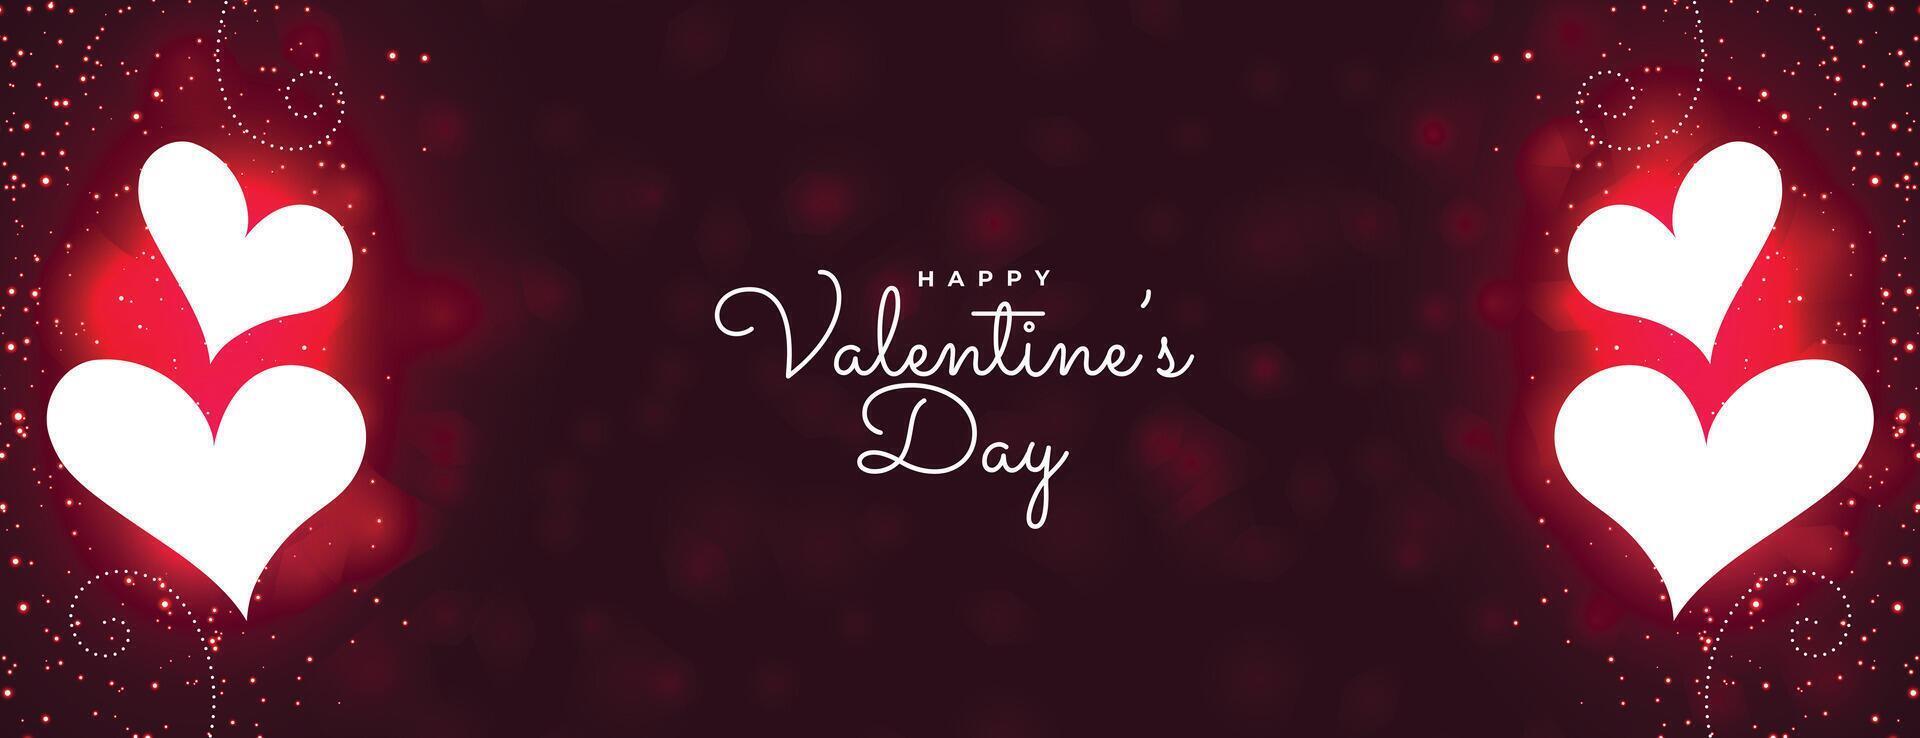 happy valentines day glowing sparkles banner design vector